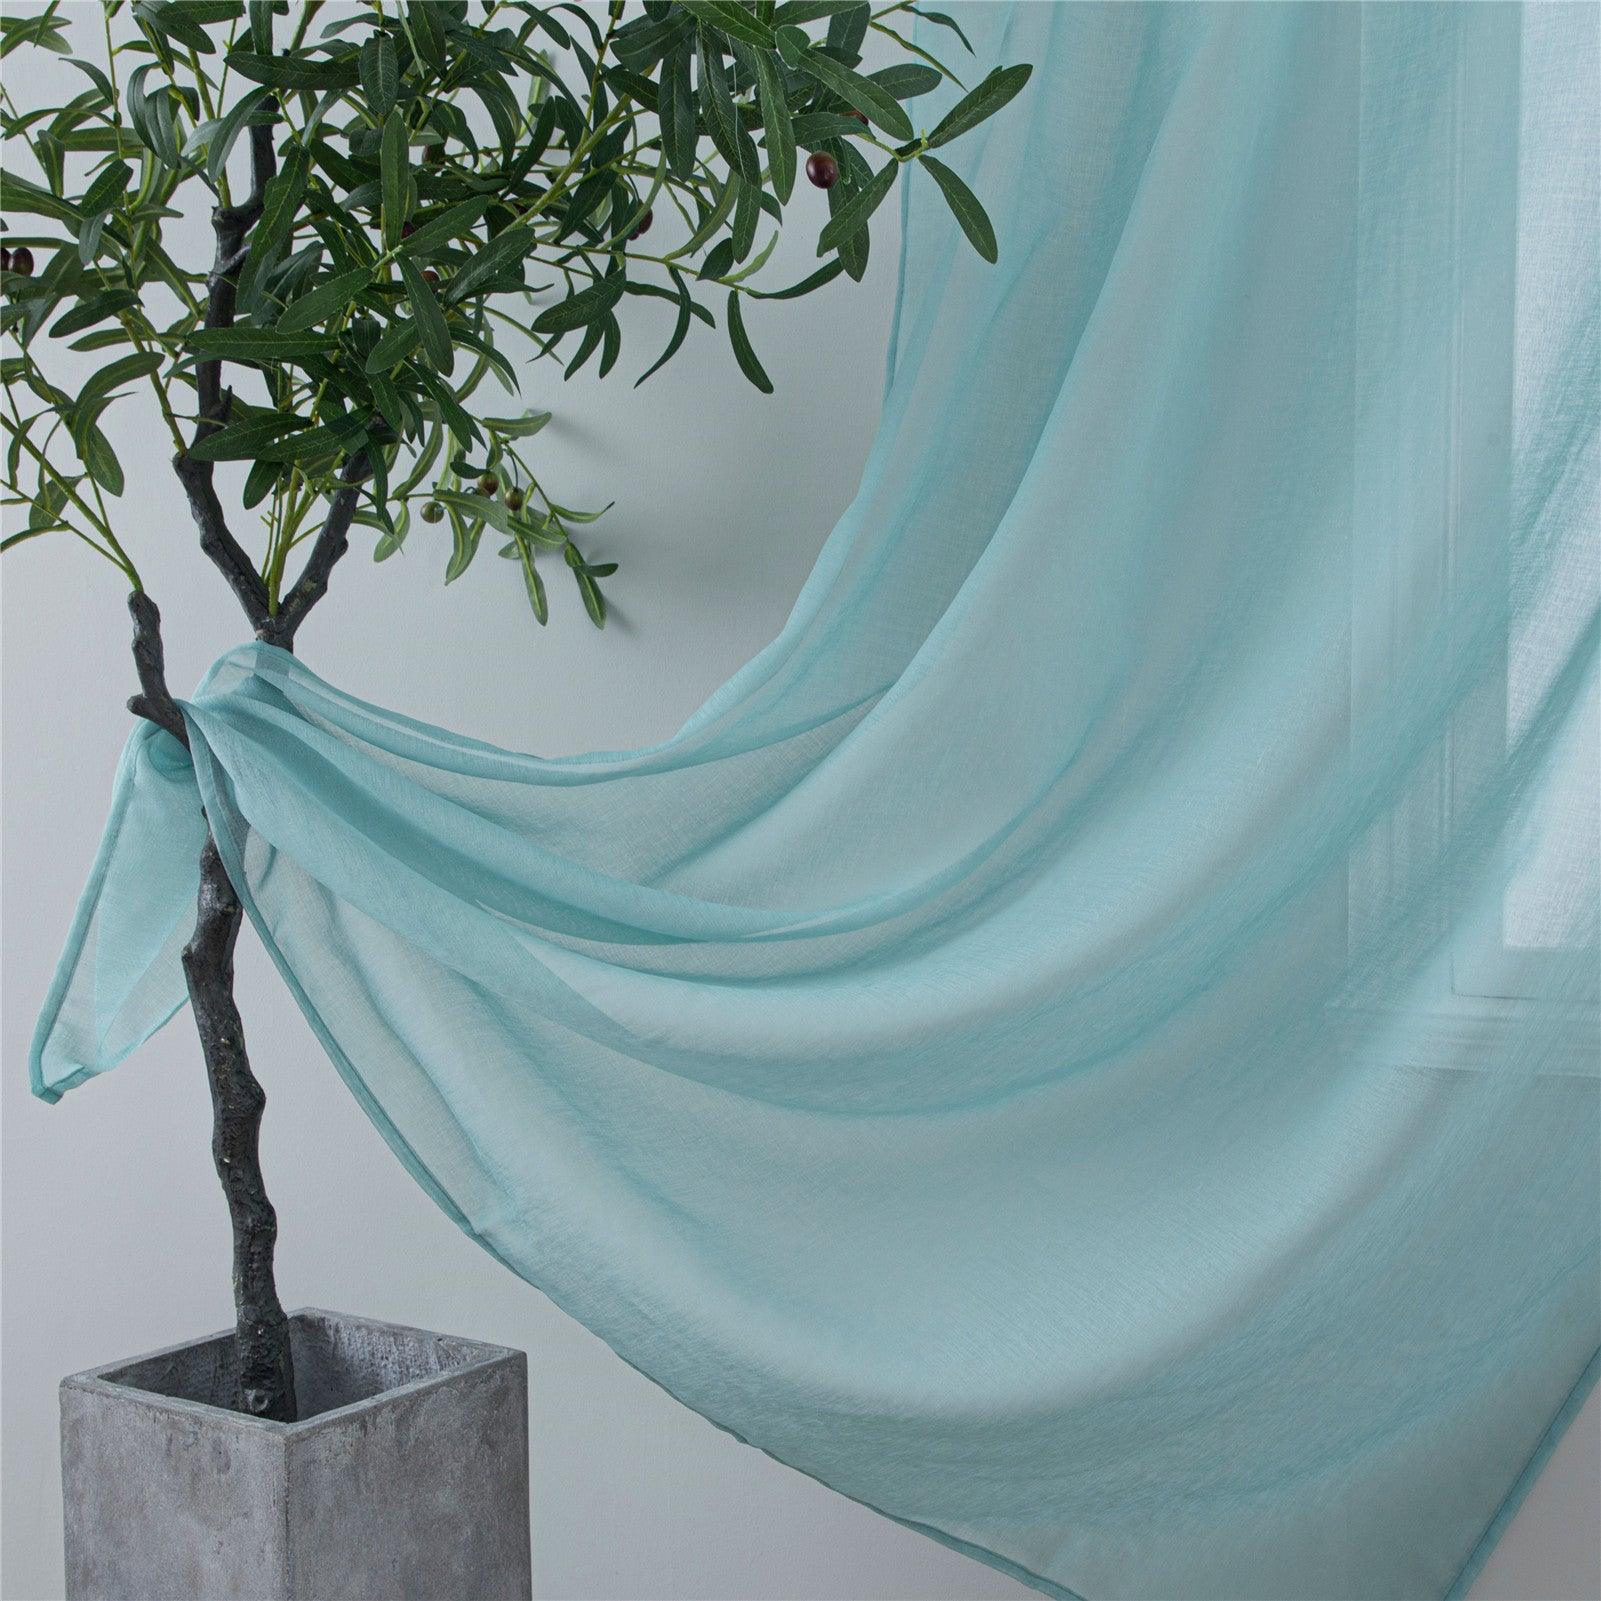 Topfinel Semi Sheer Curtains For Bedroom Living Room,Grommet Faux Linen Window Curtains - Topfinel